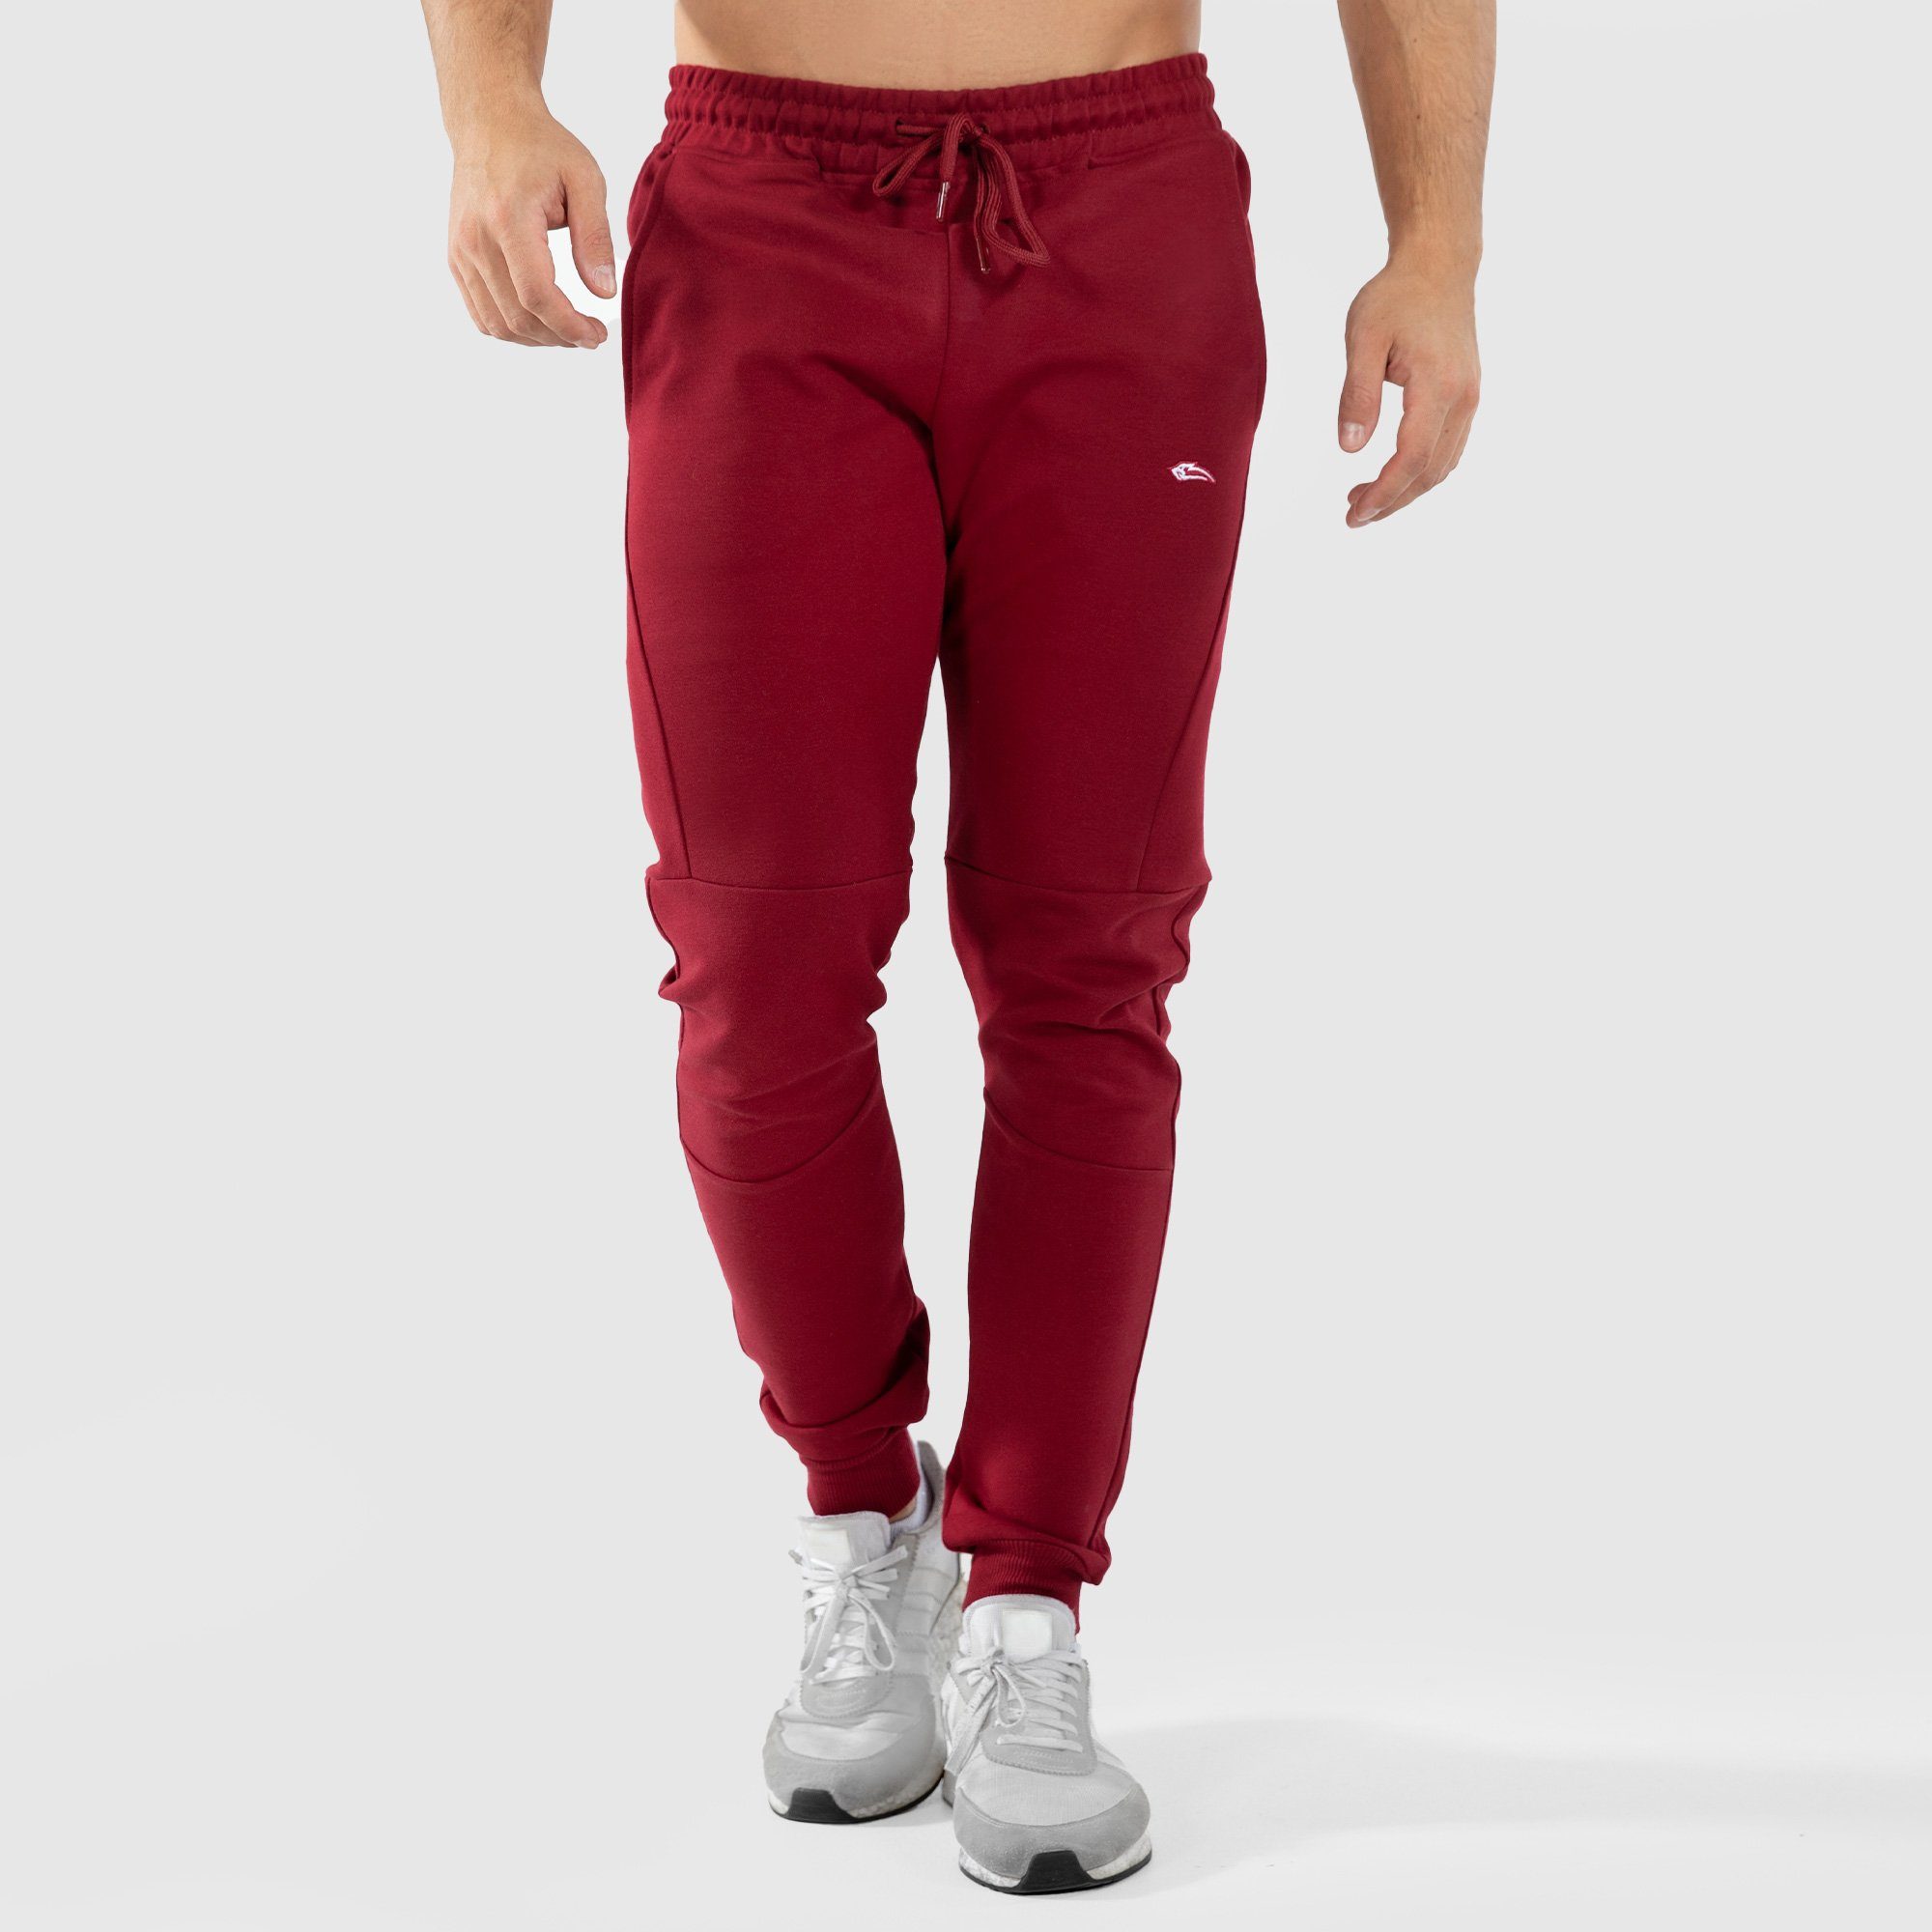 Jogginghosen in rot online kaufen » Sweatpants | OTTO